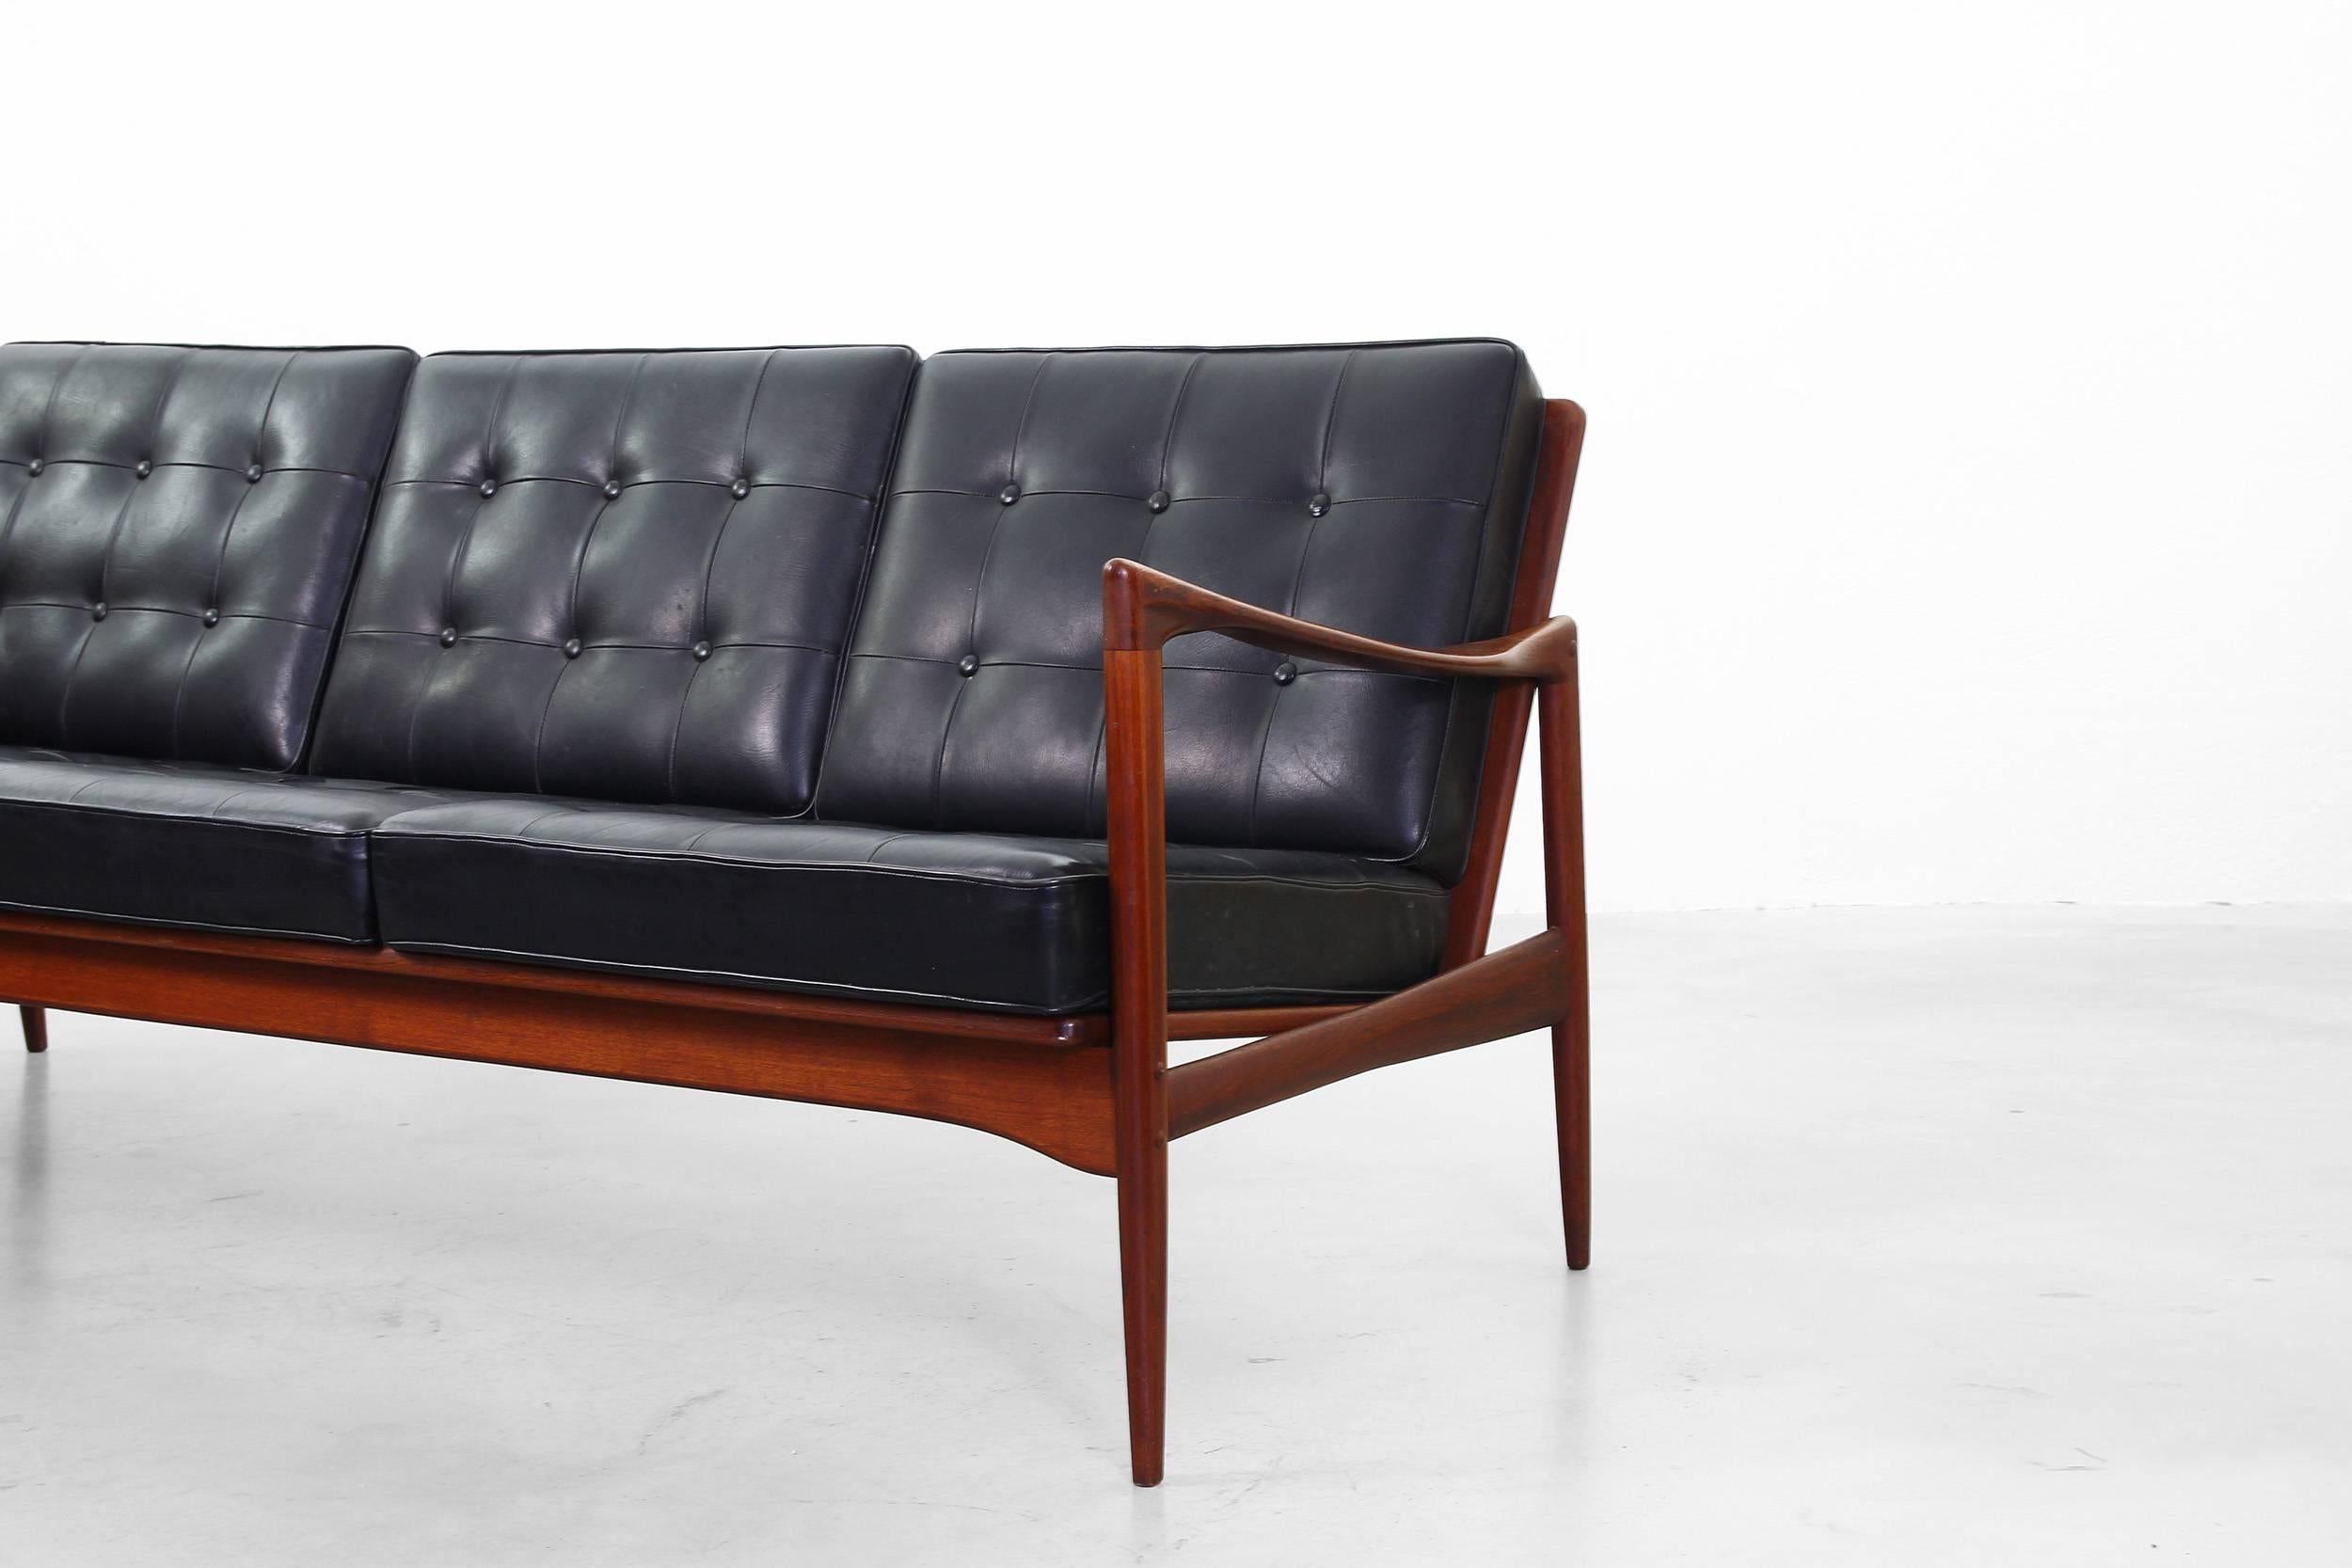 Swedish Sofa Model Kandidaten Designed by Ib Kofod-Larsen for Ope Mobler